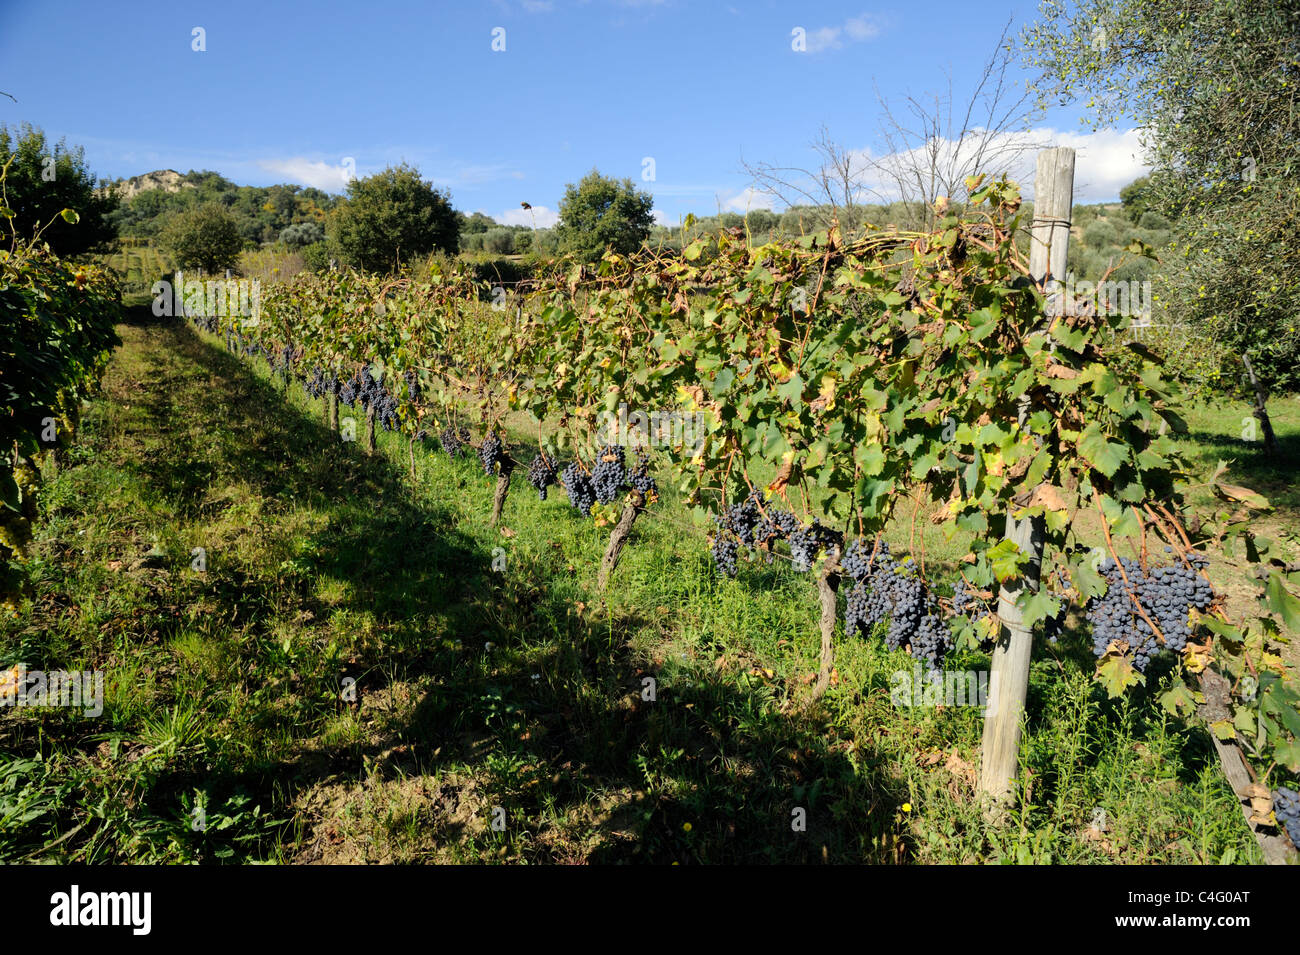 italy, basilicata, vineyards Stock Photo